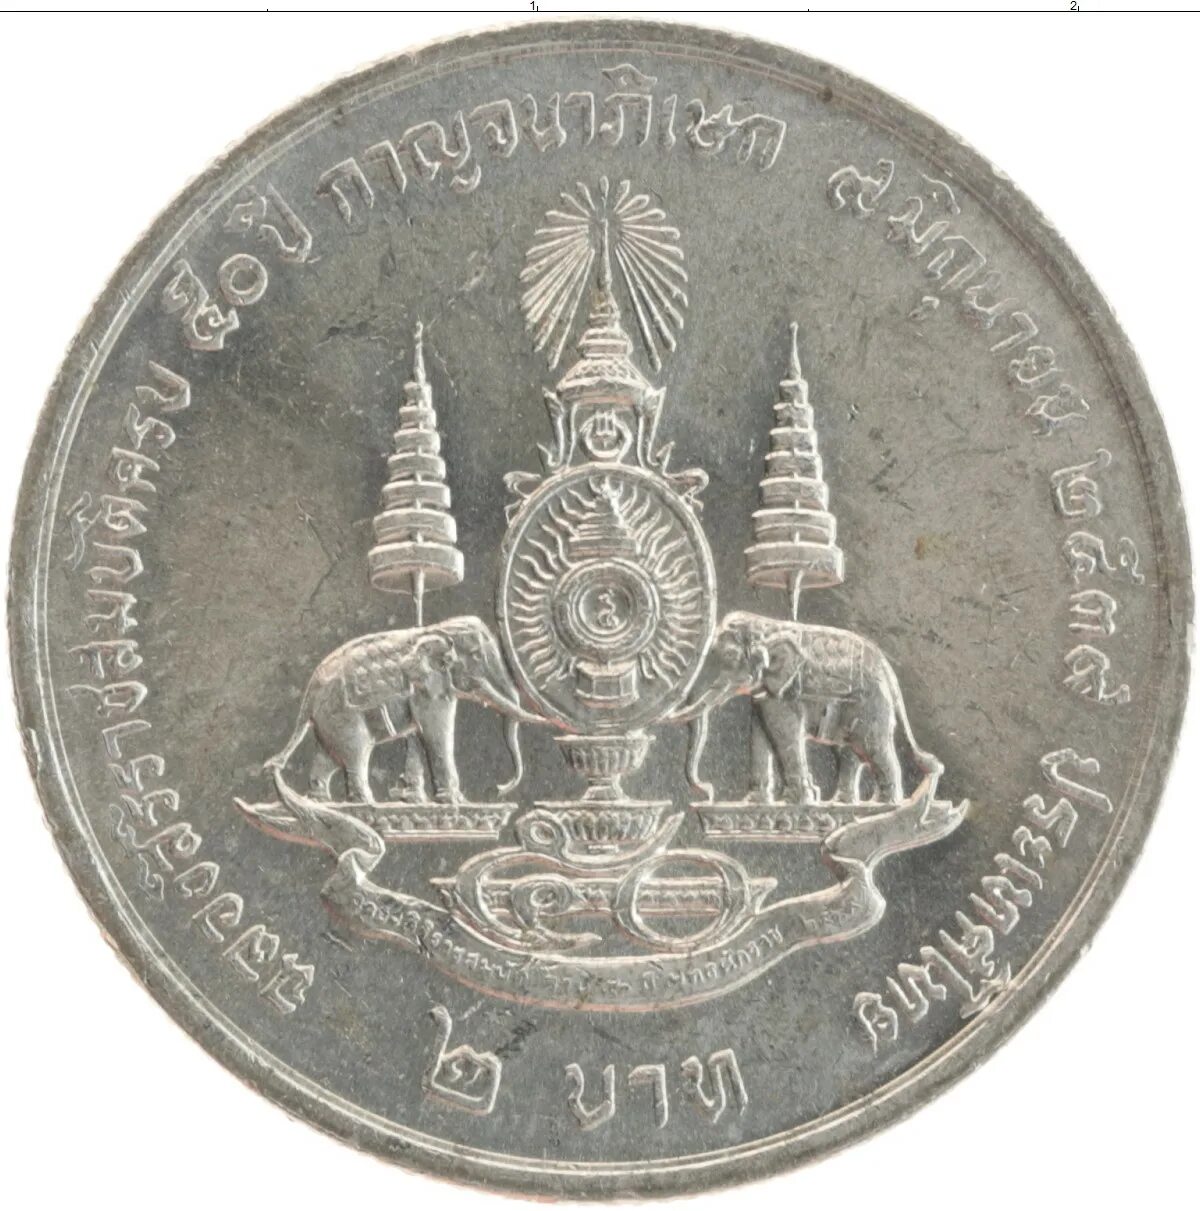 Таиландский бат монета. Монеты Таиланда 1 бат. Монета Таиланд 1 бат 1996. Валюта Тайланда монеты 1 бат.